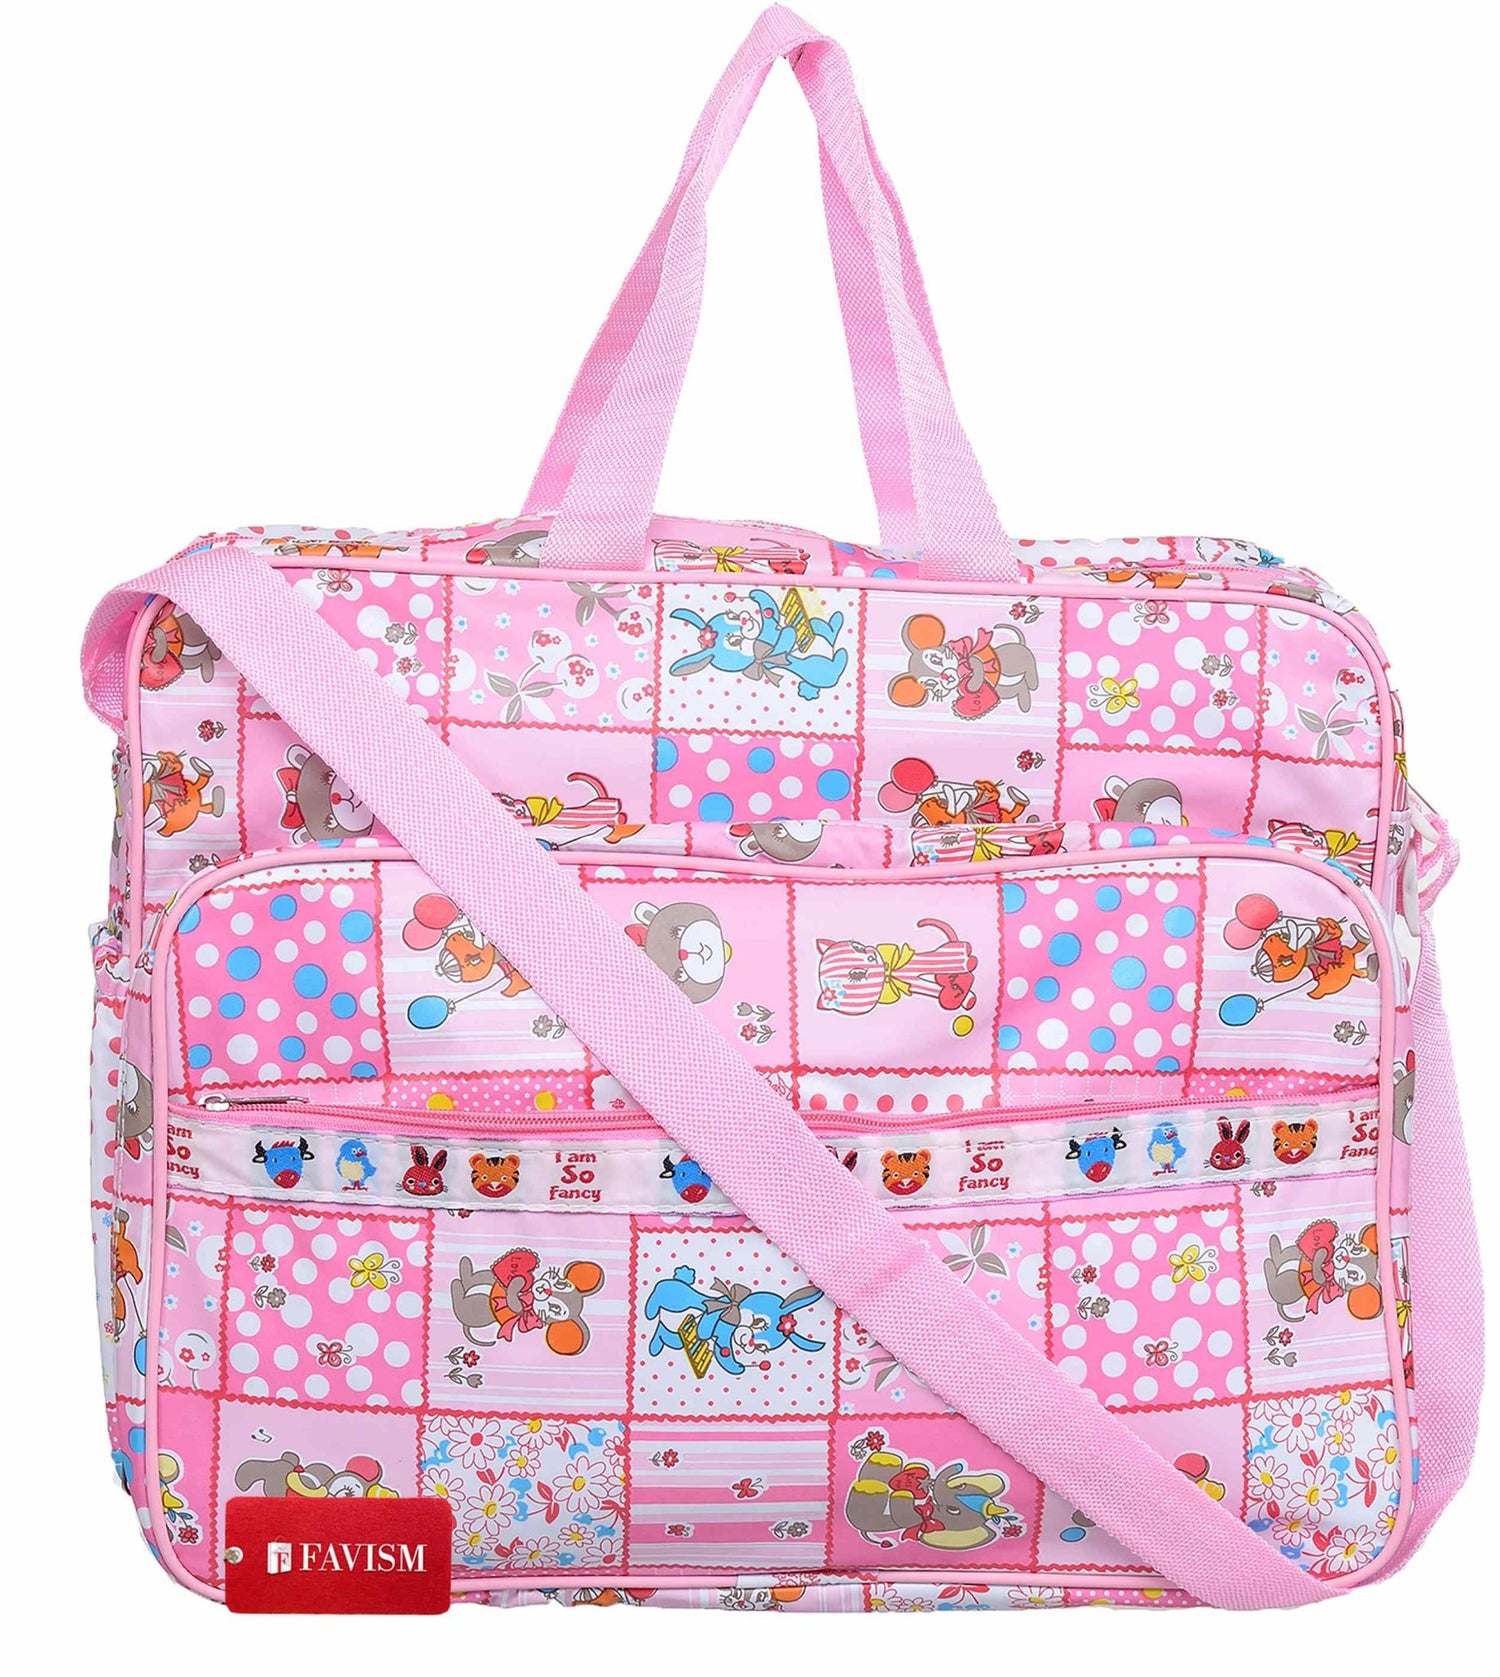 Big diaper bag for mother | baby accessories bag - FAVISM